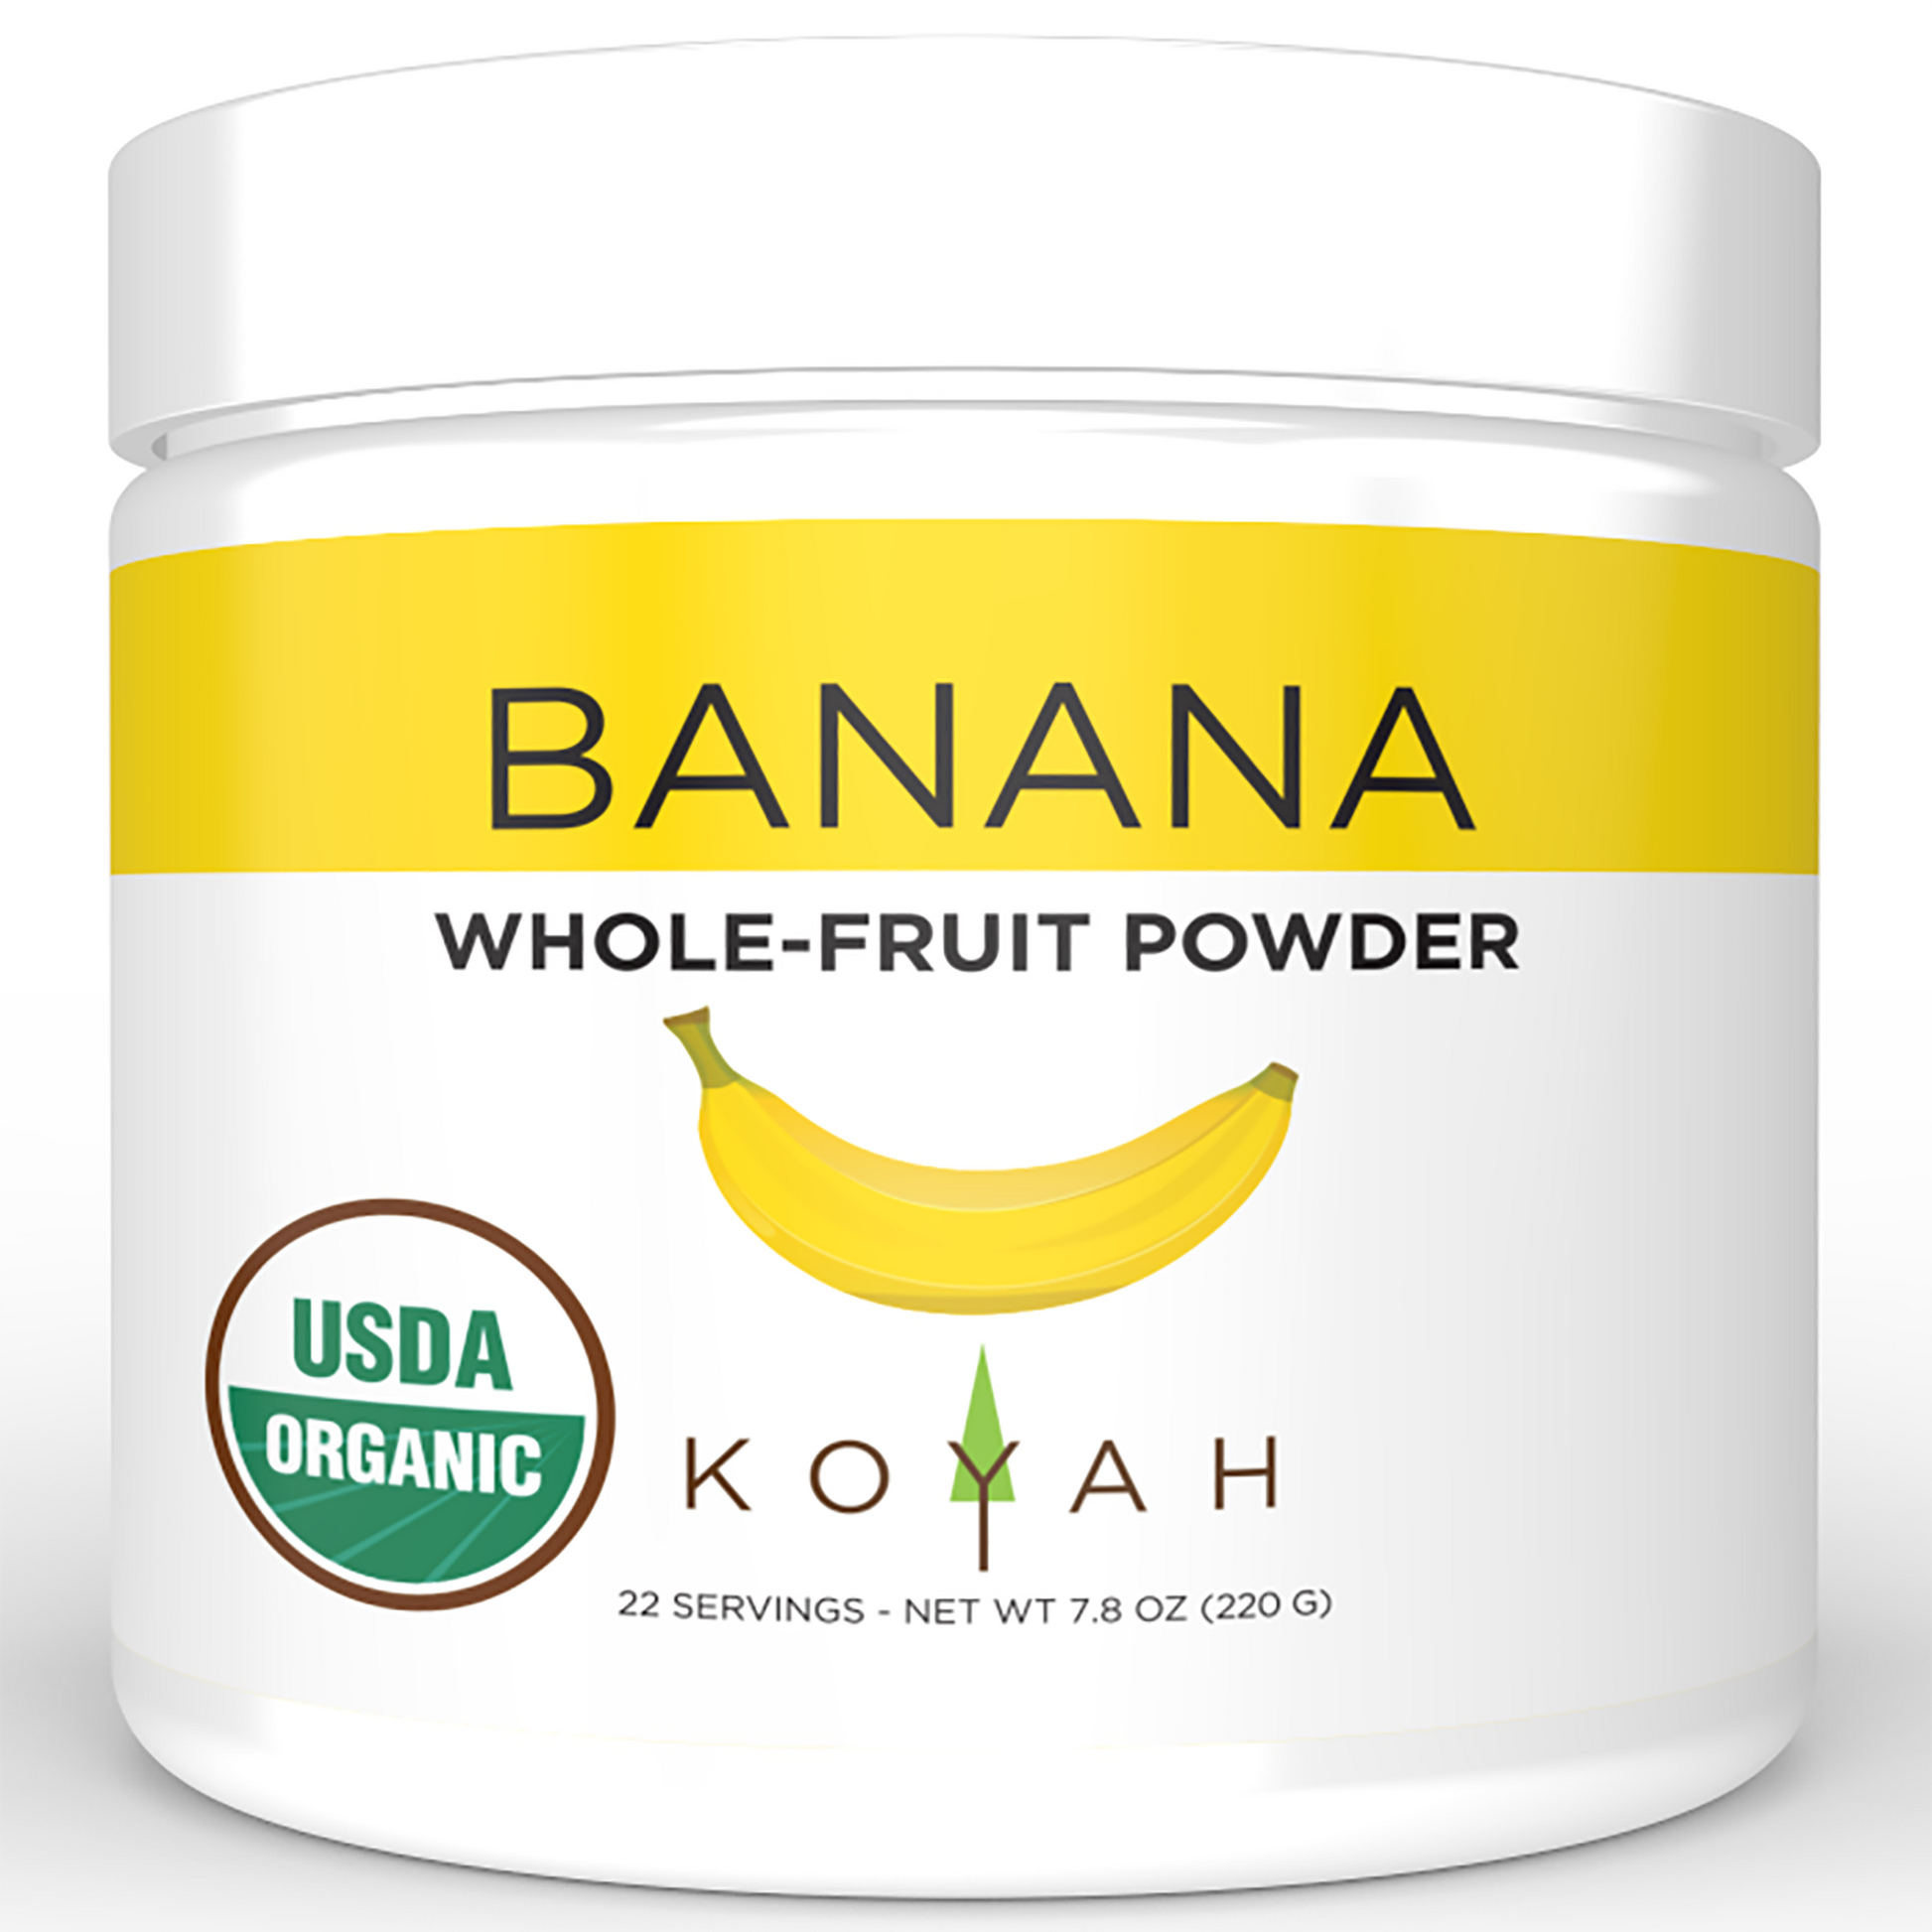 Koyah - Organic Freeze-Dried Banana Powder - 7.8 oz (220 Grams)